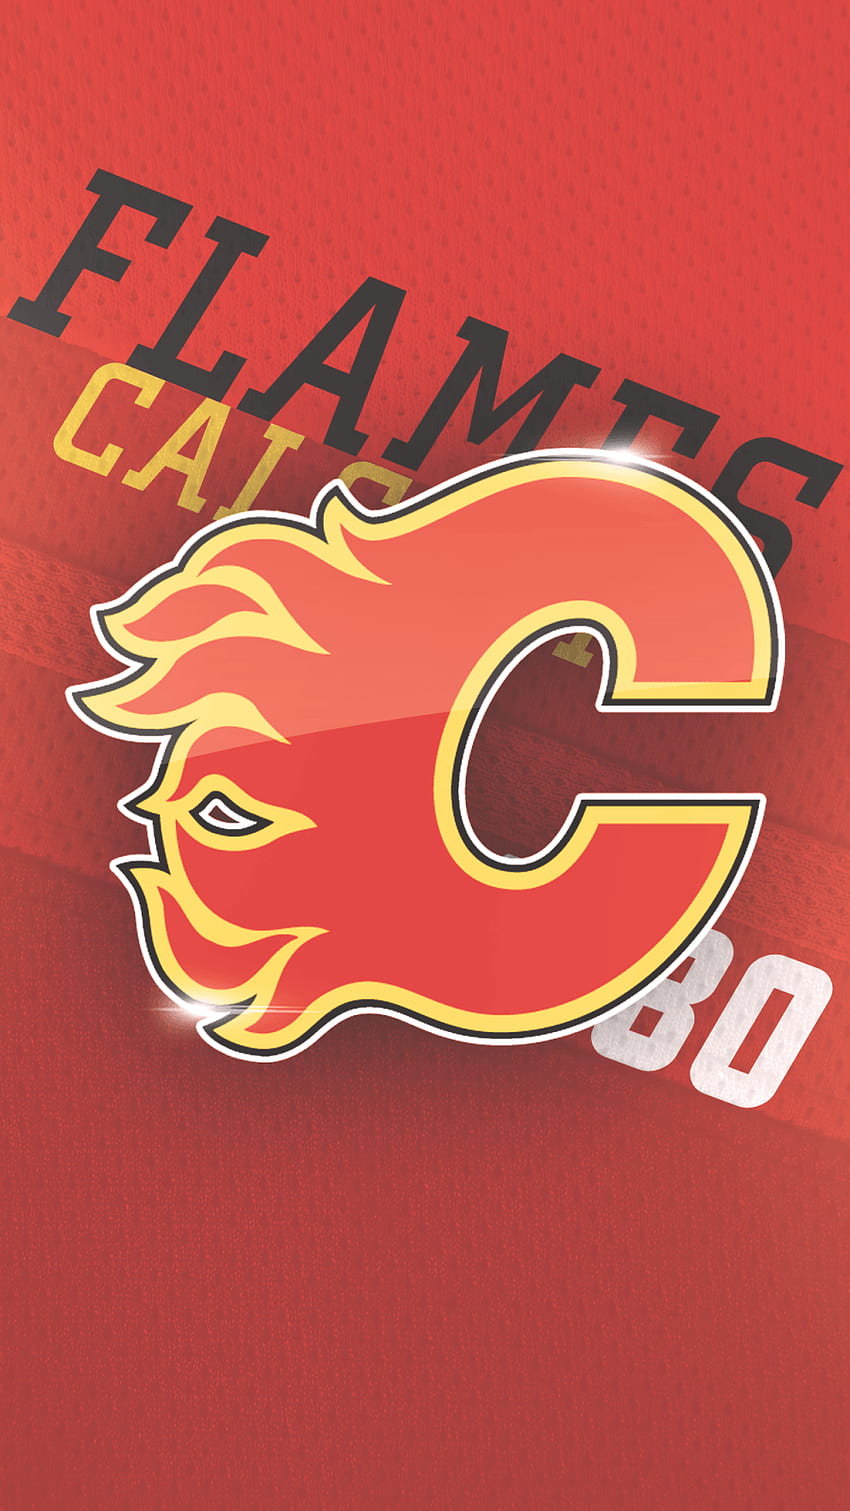 Wallpaper ID 295614  Sports Calgary Flames Phone Wallpaper NHL  2160x3840 free download